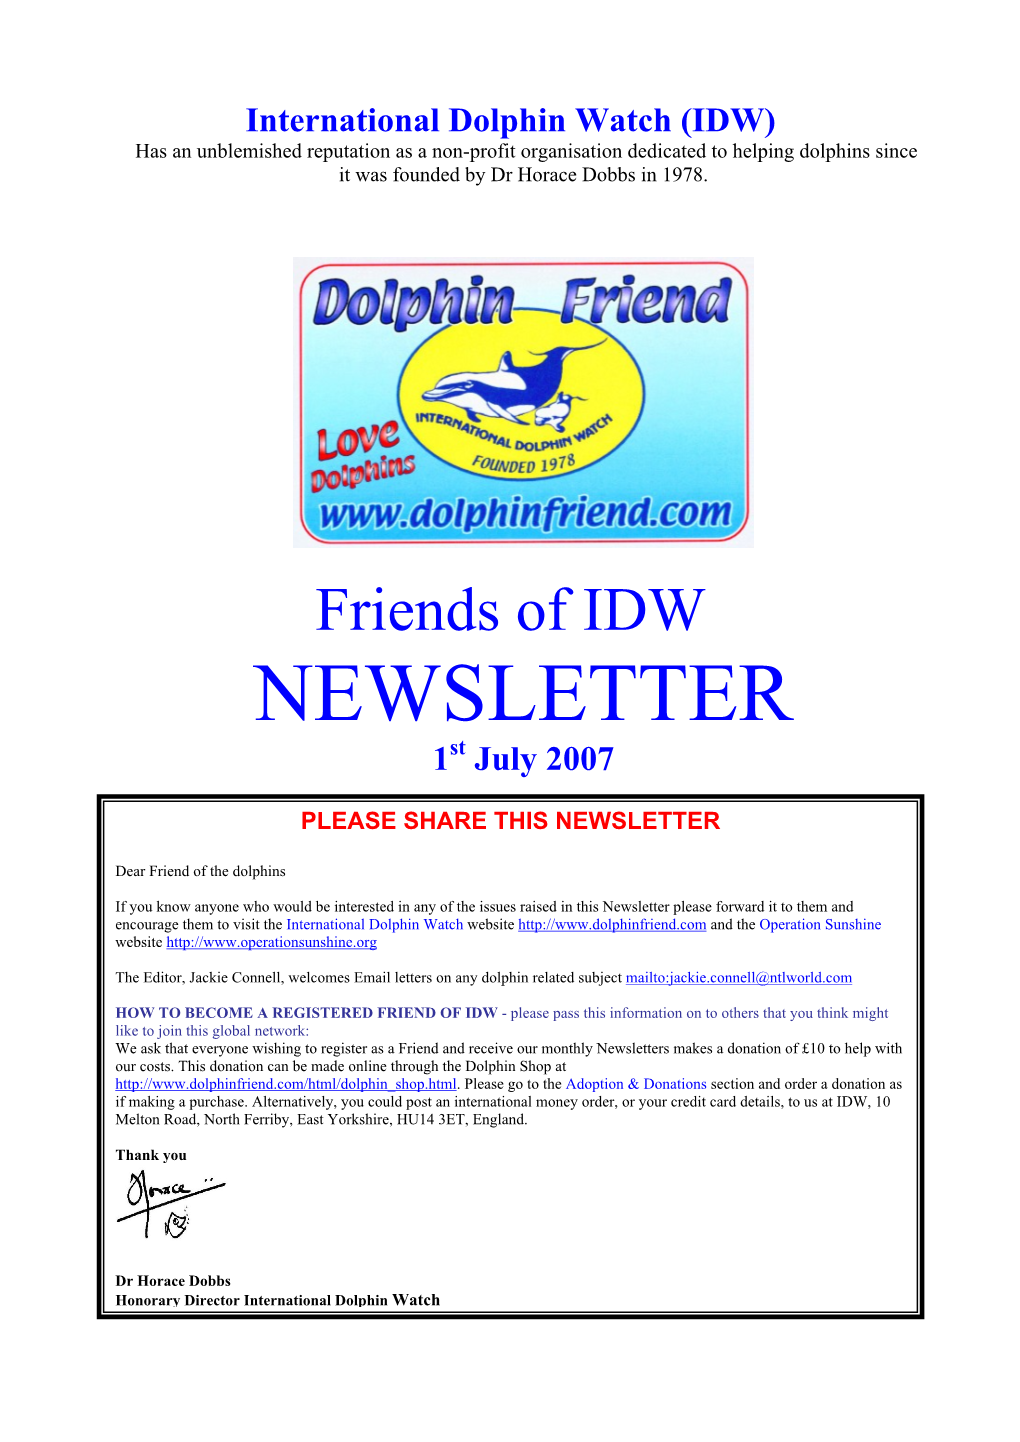 Friends of IDW Newsletter JULY 07